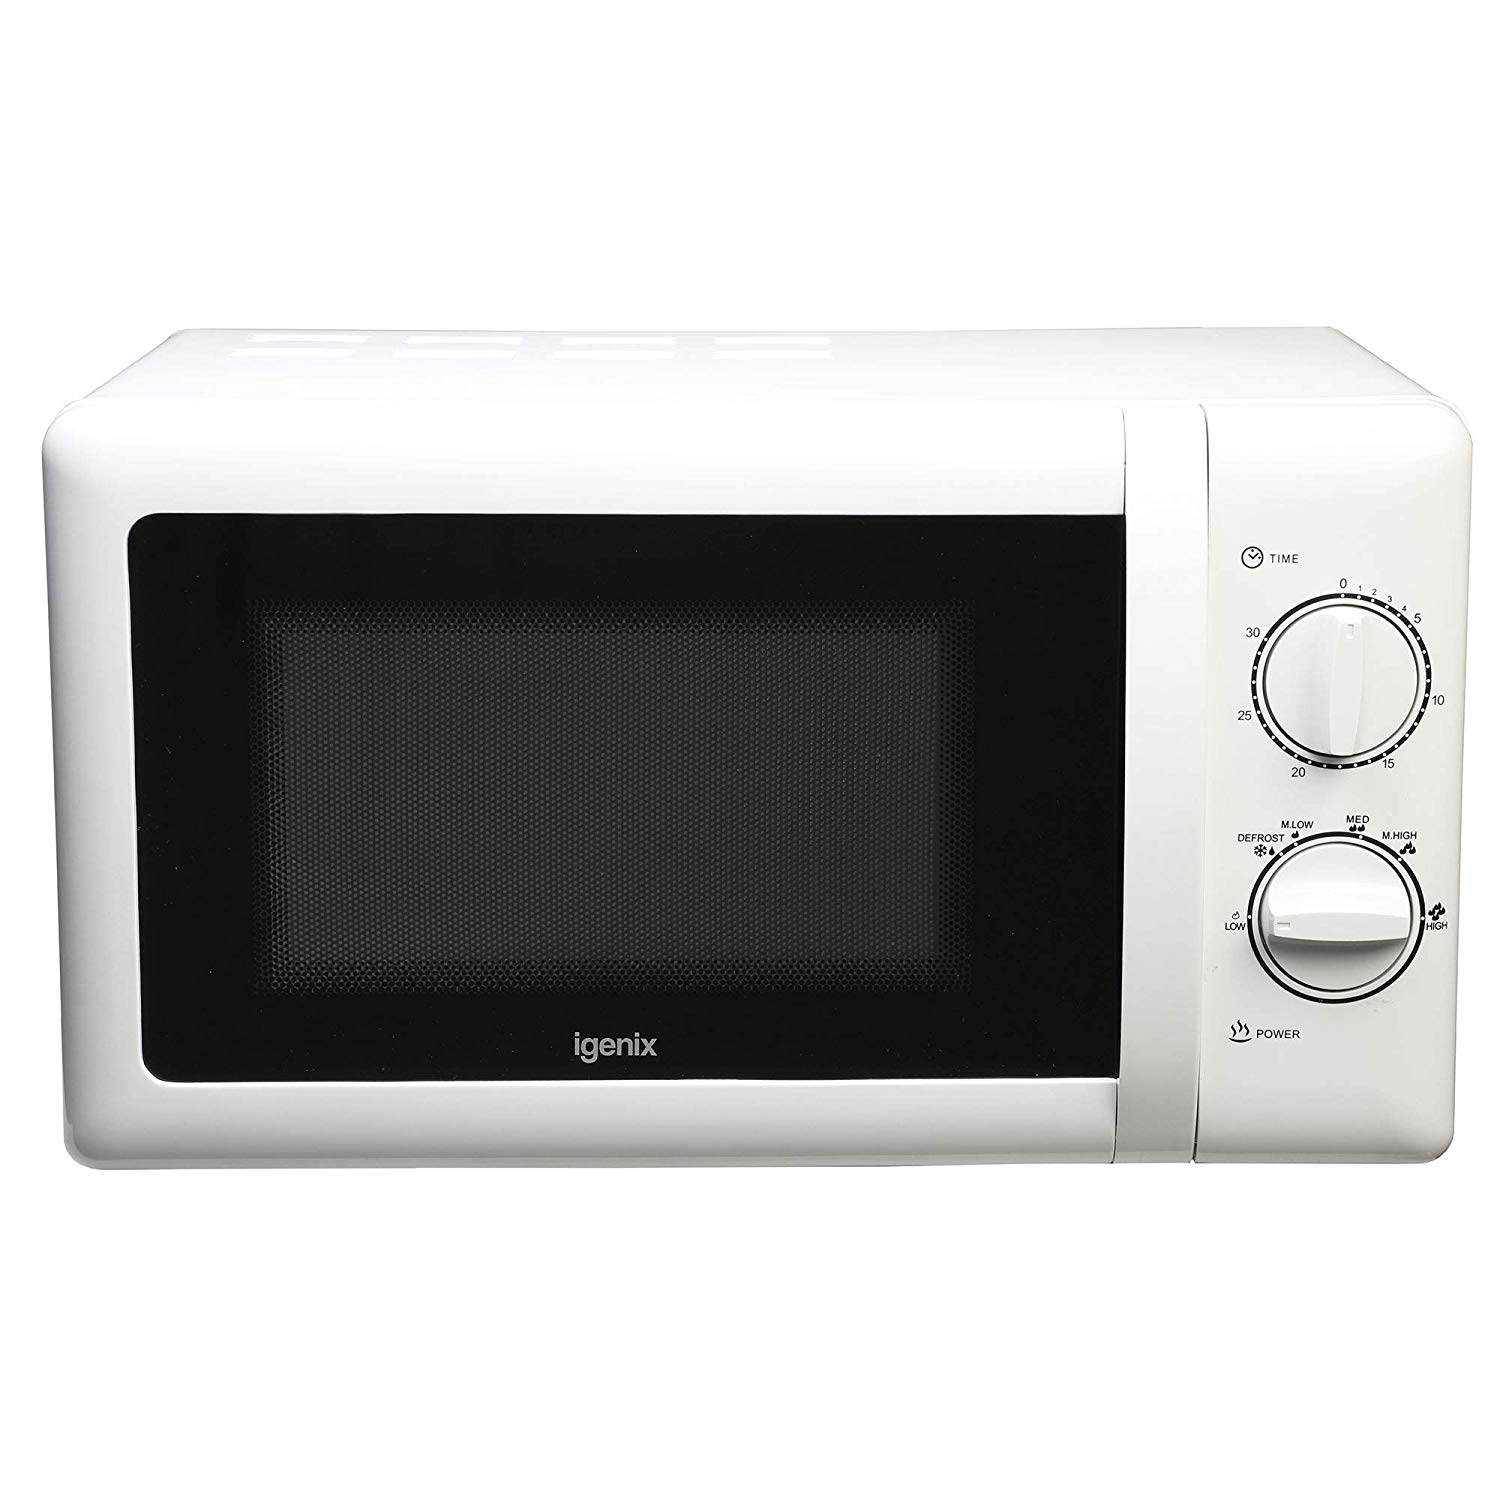 Igenix 20 Lt Manual Microwave (white) - 0